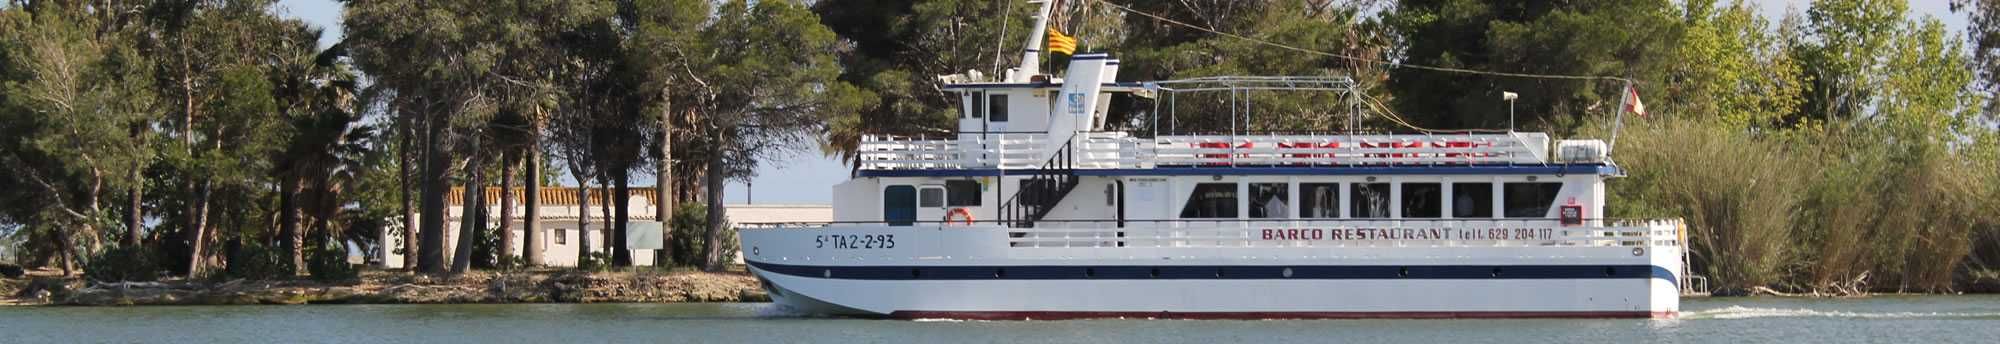 Crucero en el Parque Natural Delta del Ebro